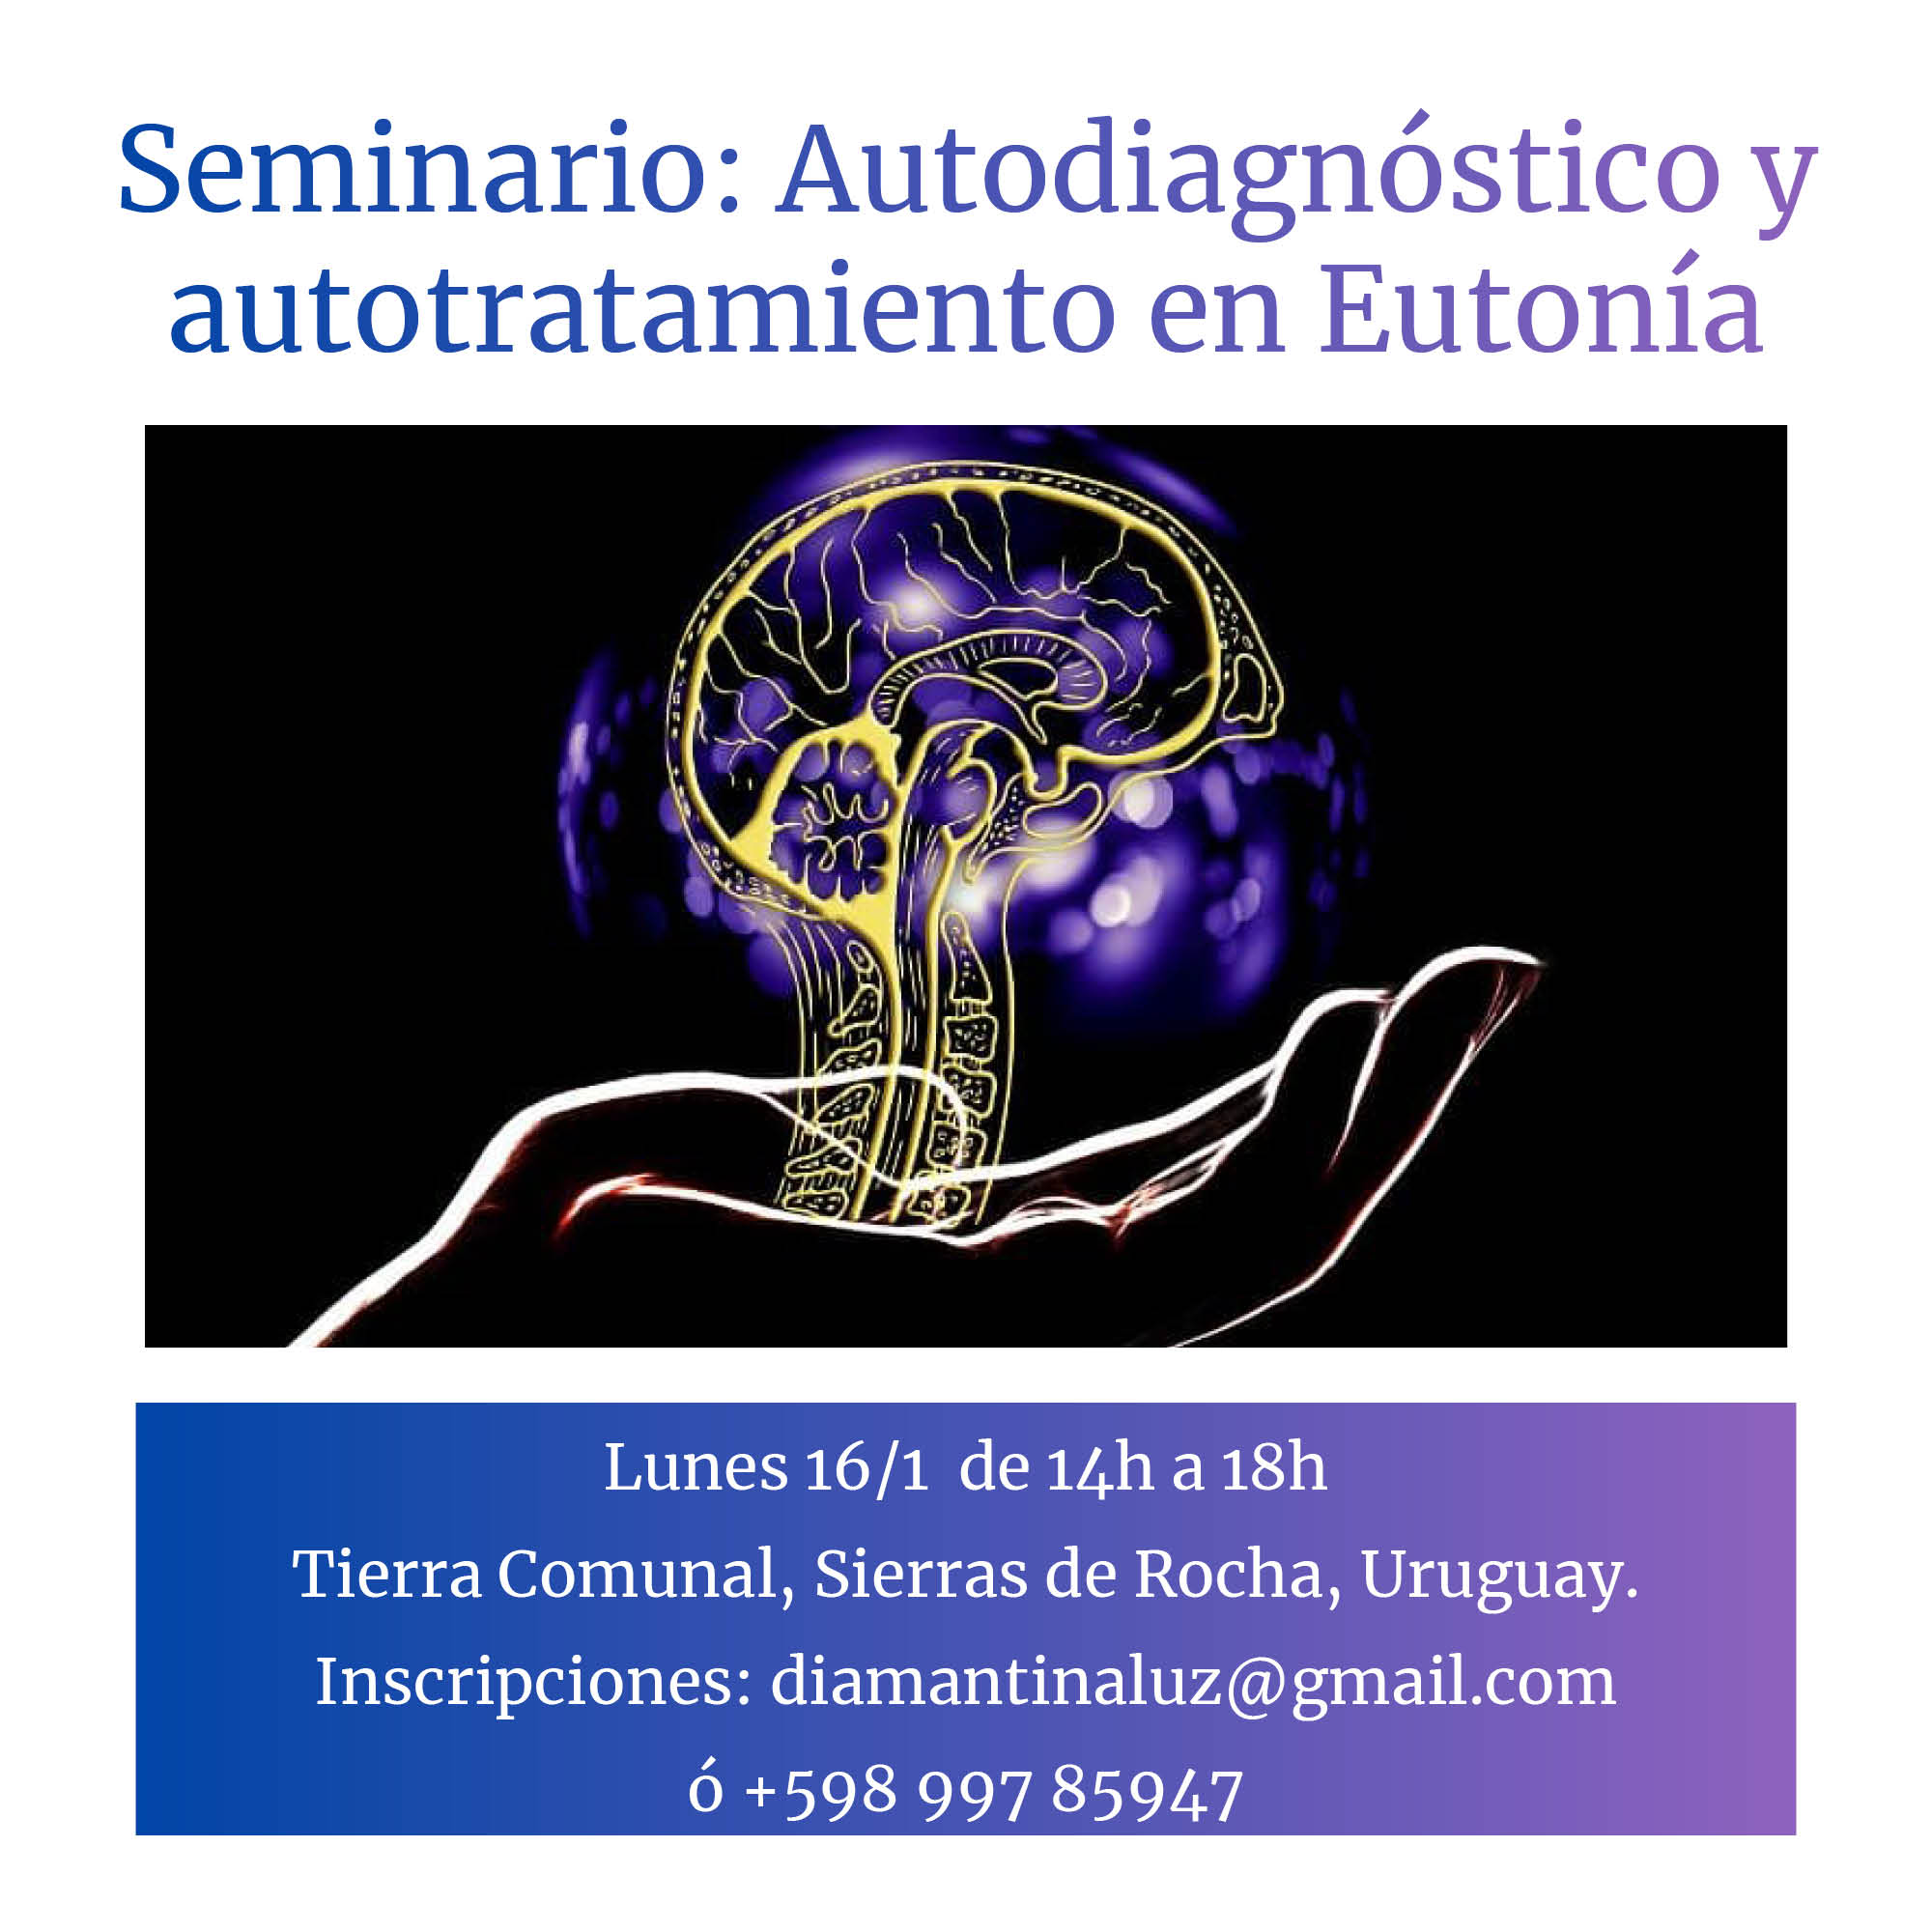 Seminarios de Eutona en Uruguay